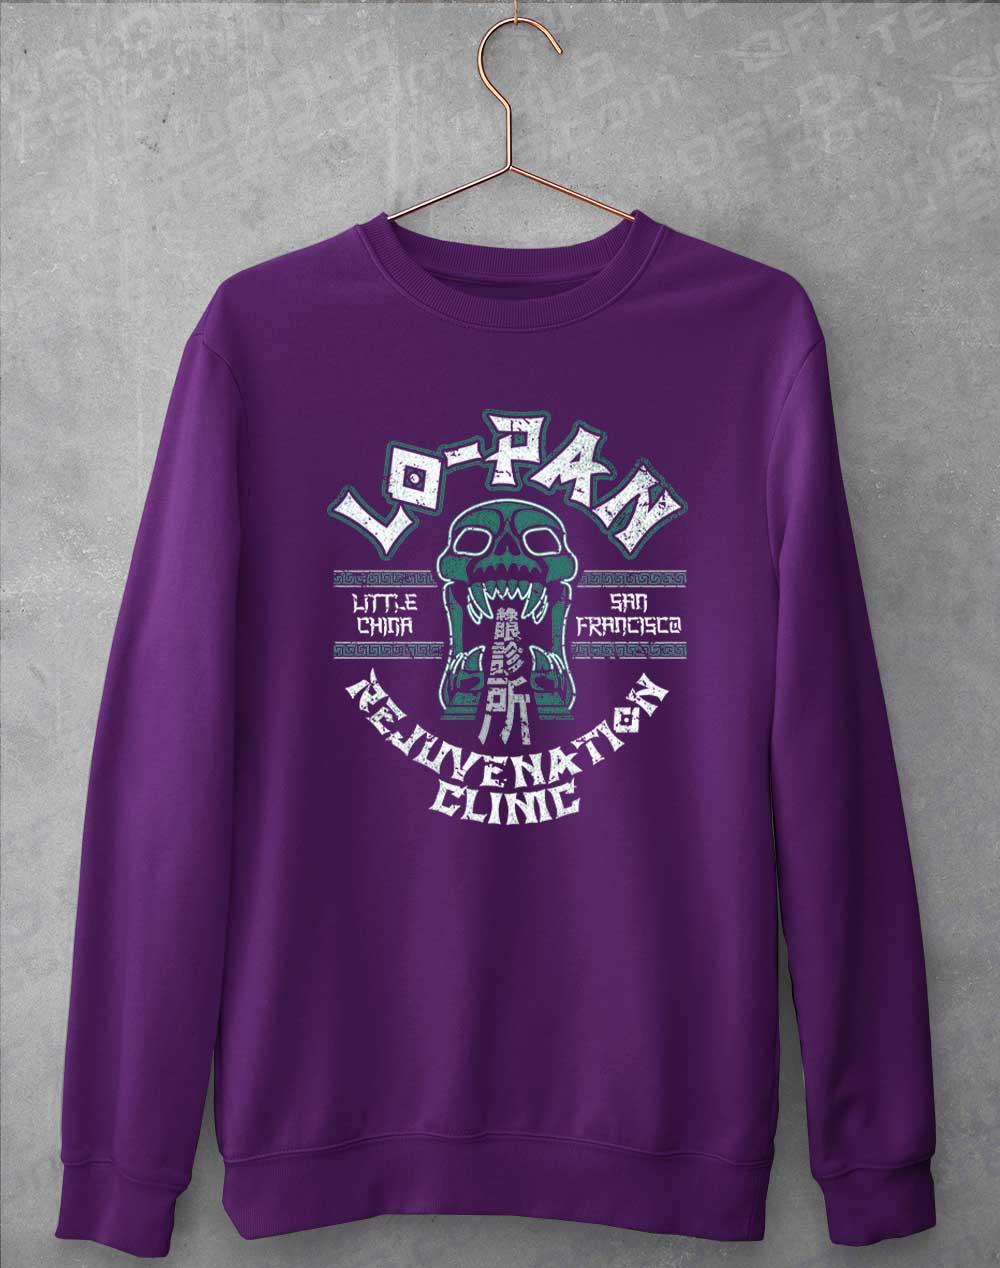 Lo Pan Rejuvenation Clinic Sweatshirt